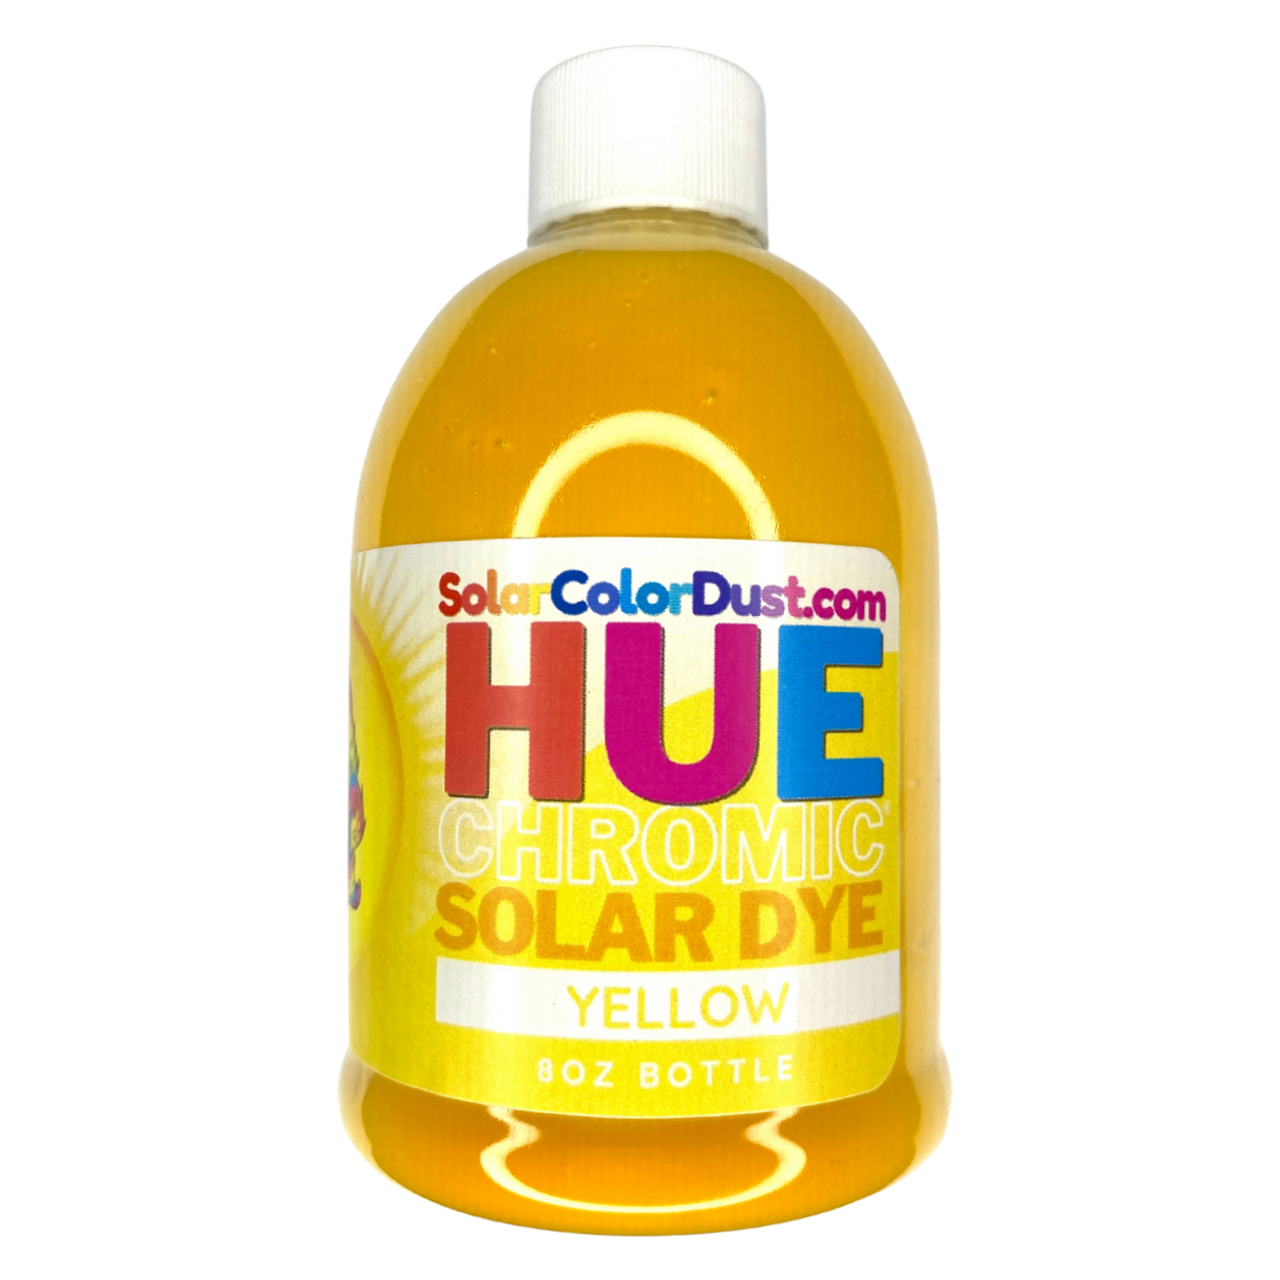 Hue Chromic® Solar Fabric Dye - Colorless to Yellow